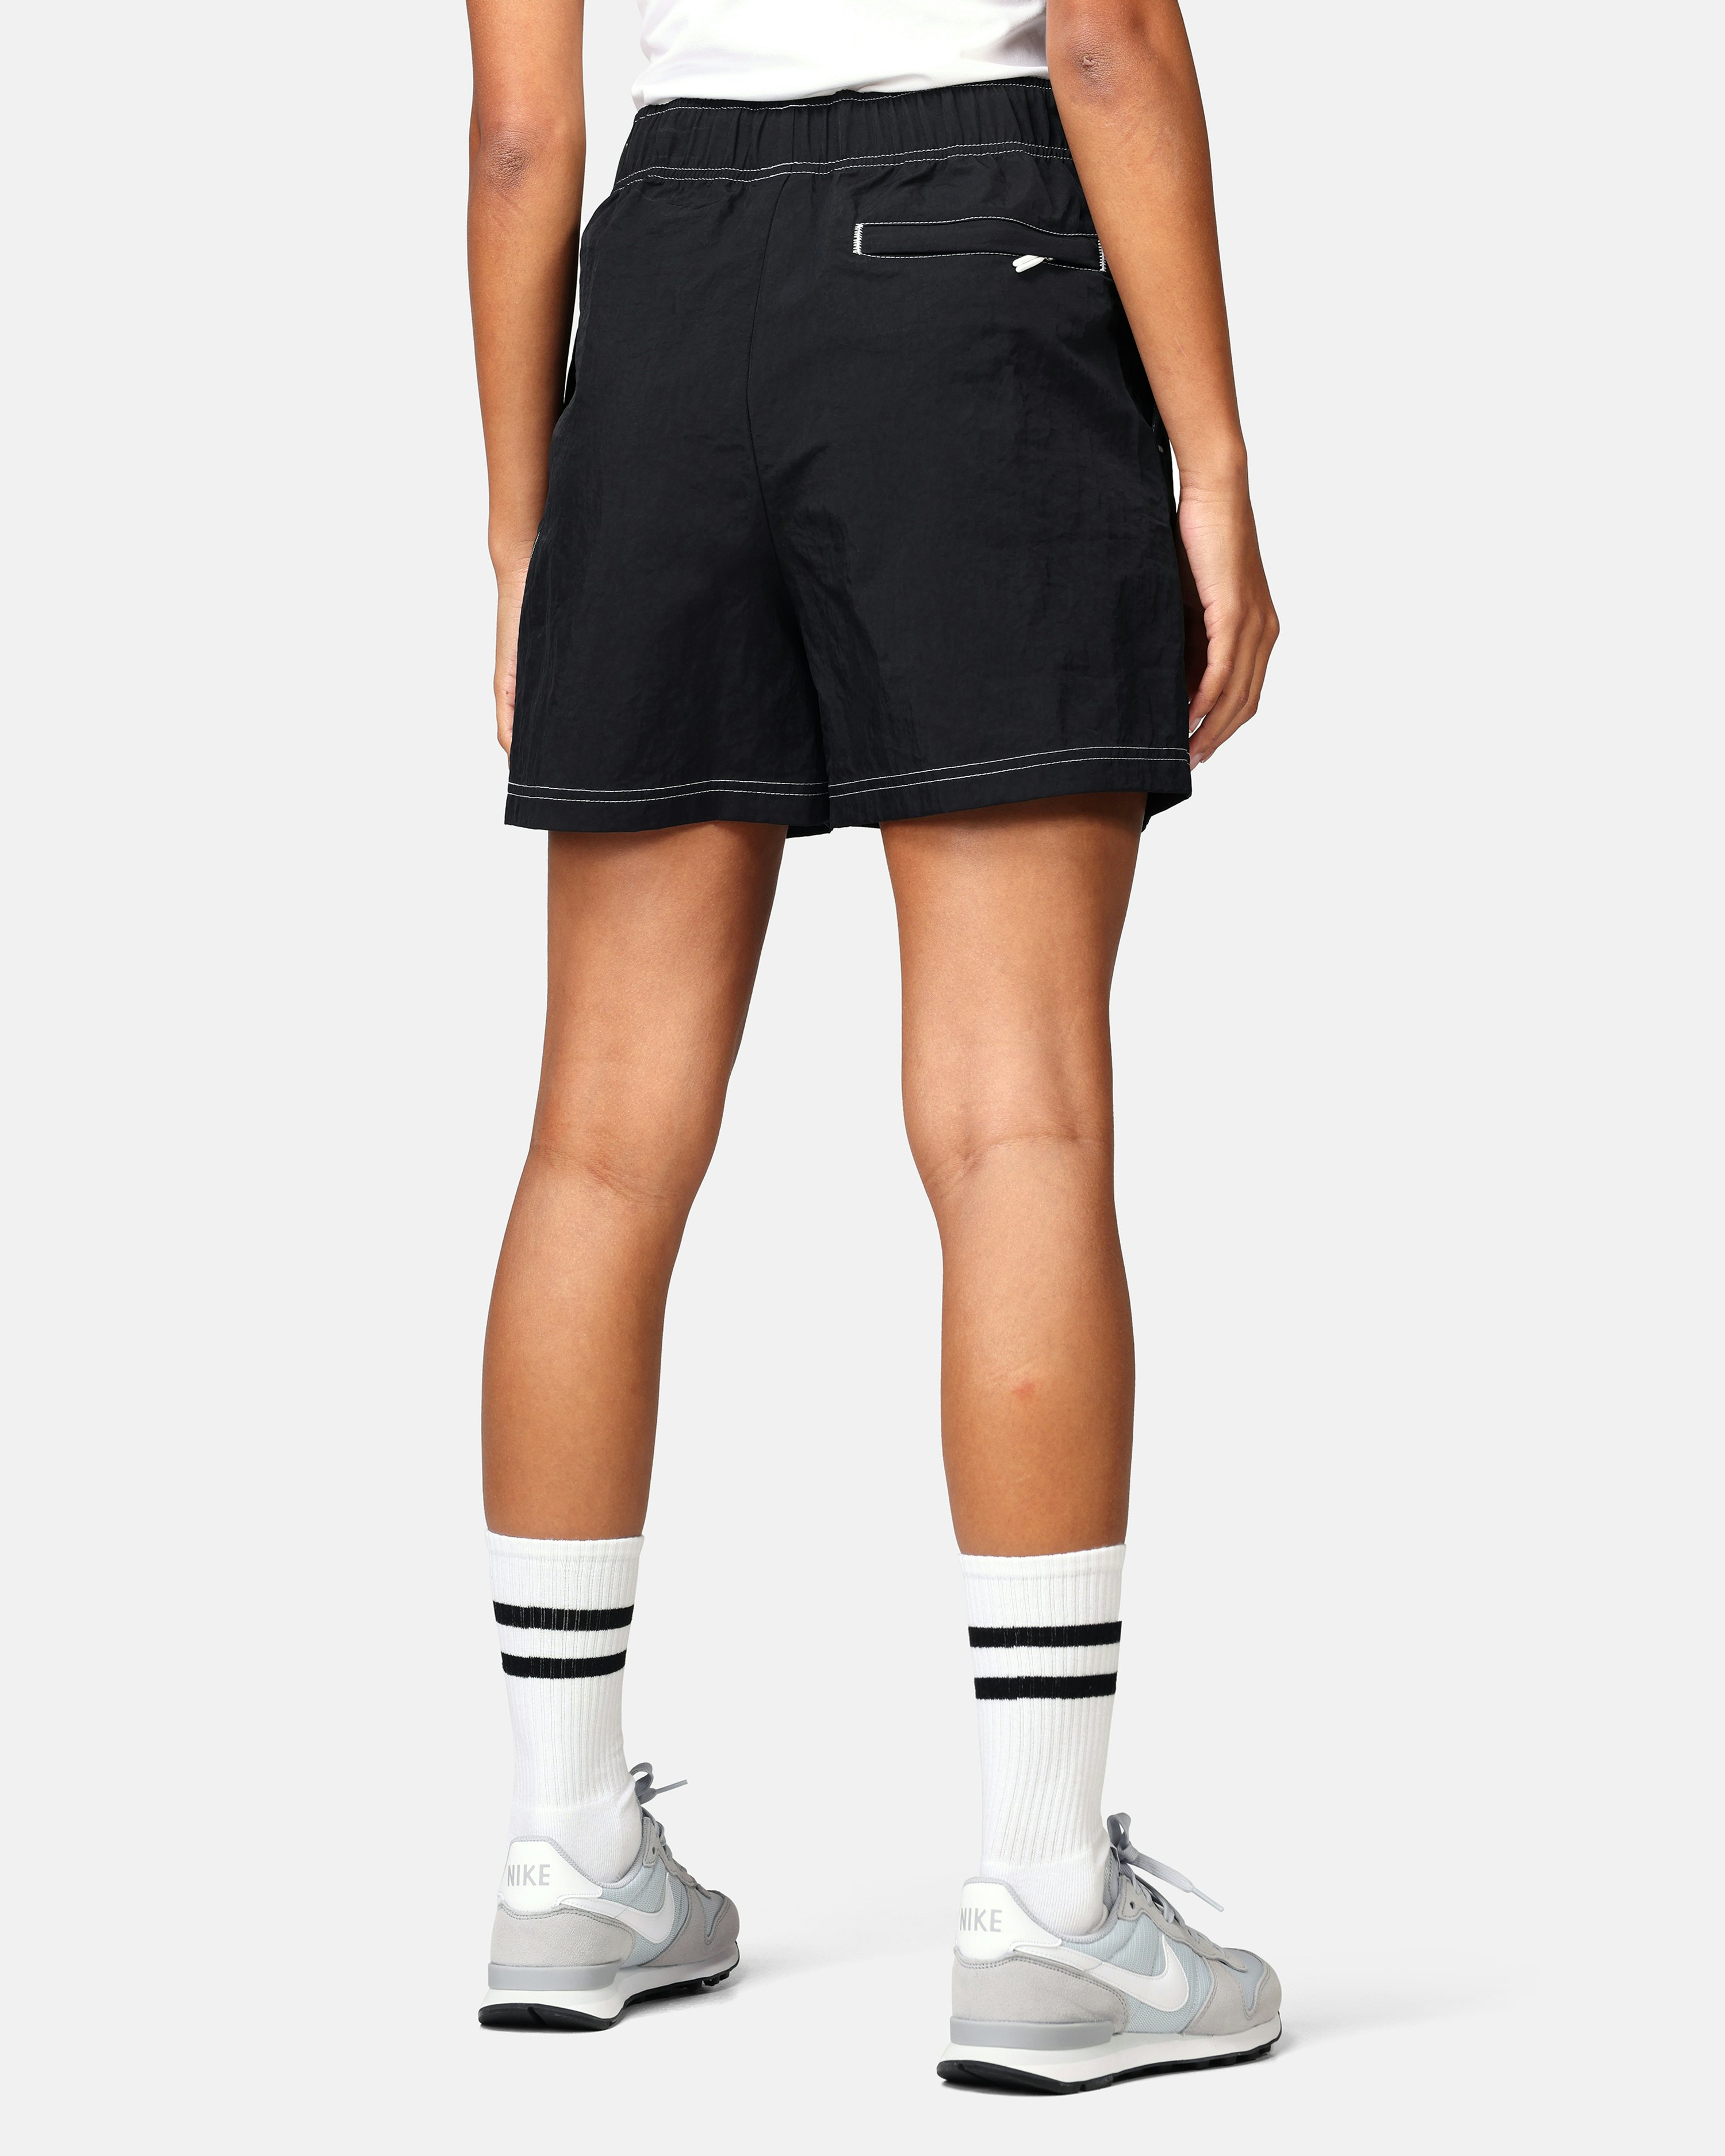 Nike Shorts - Swoosh Woven Multi | Women | at Junkyard.com